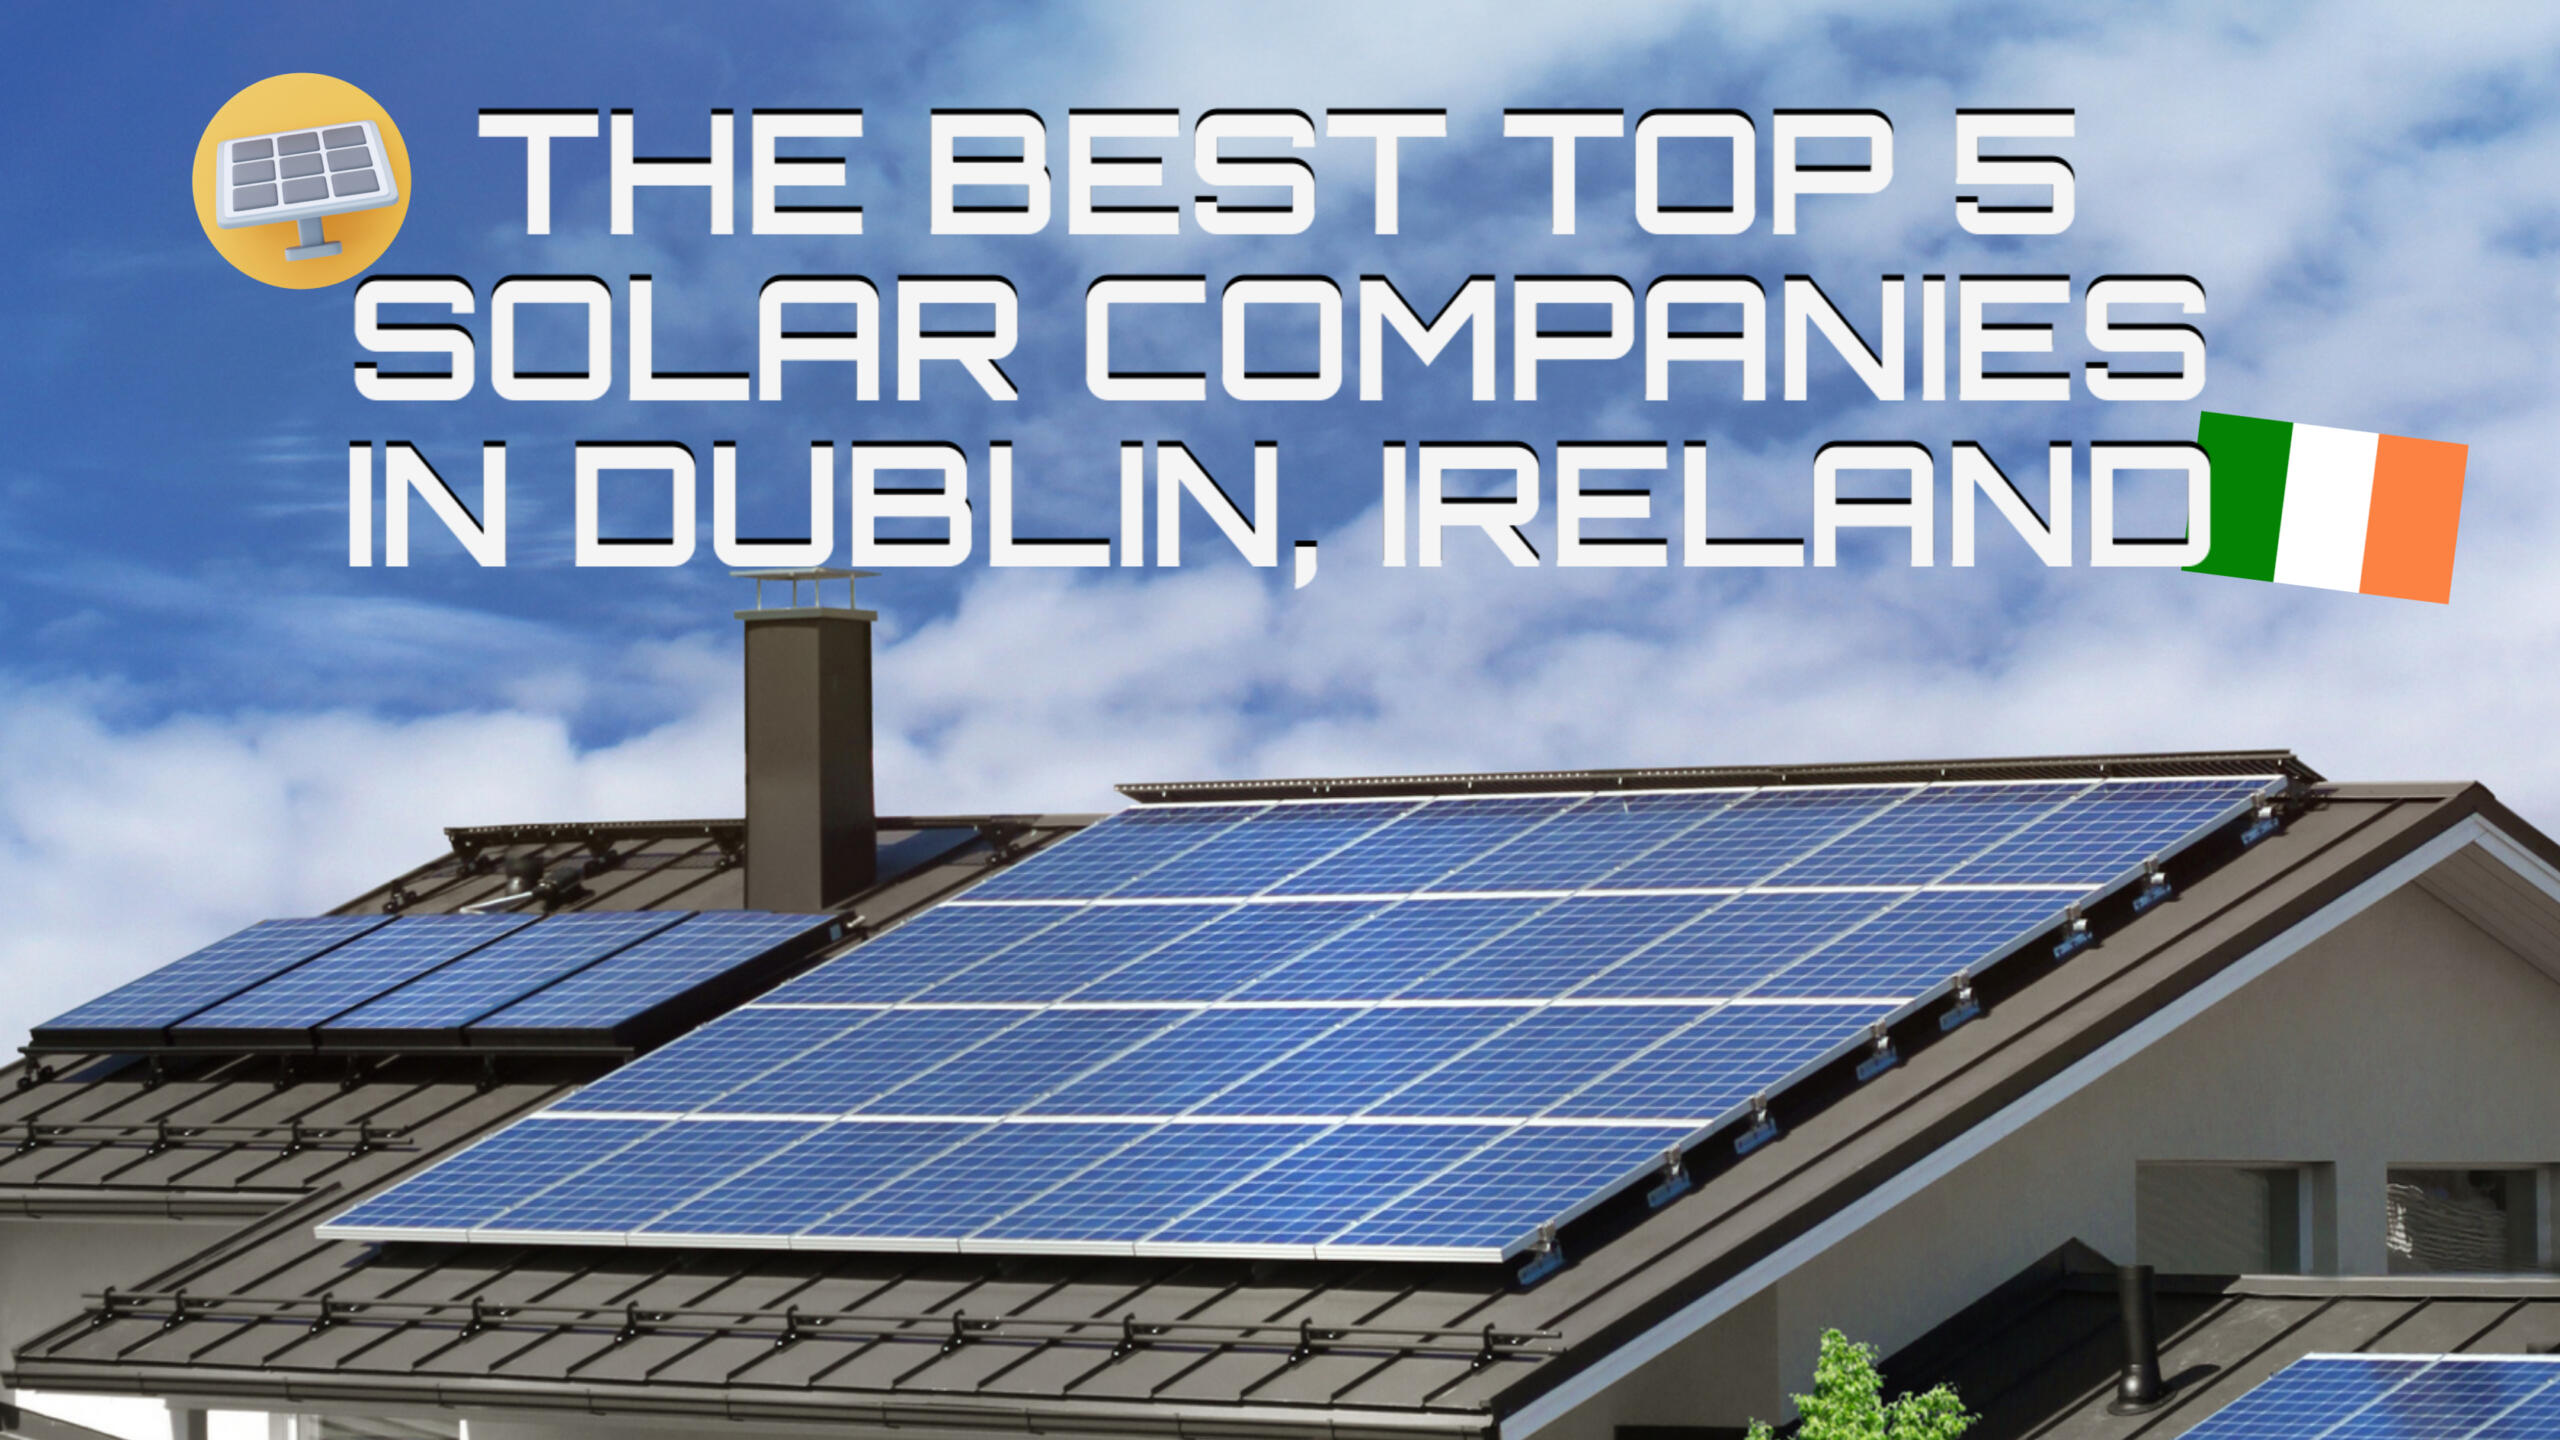 The Best Top 5 Solar Companies in Dublin, Ireland